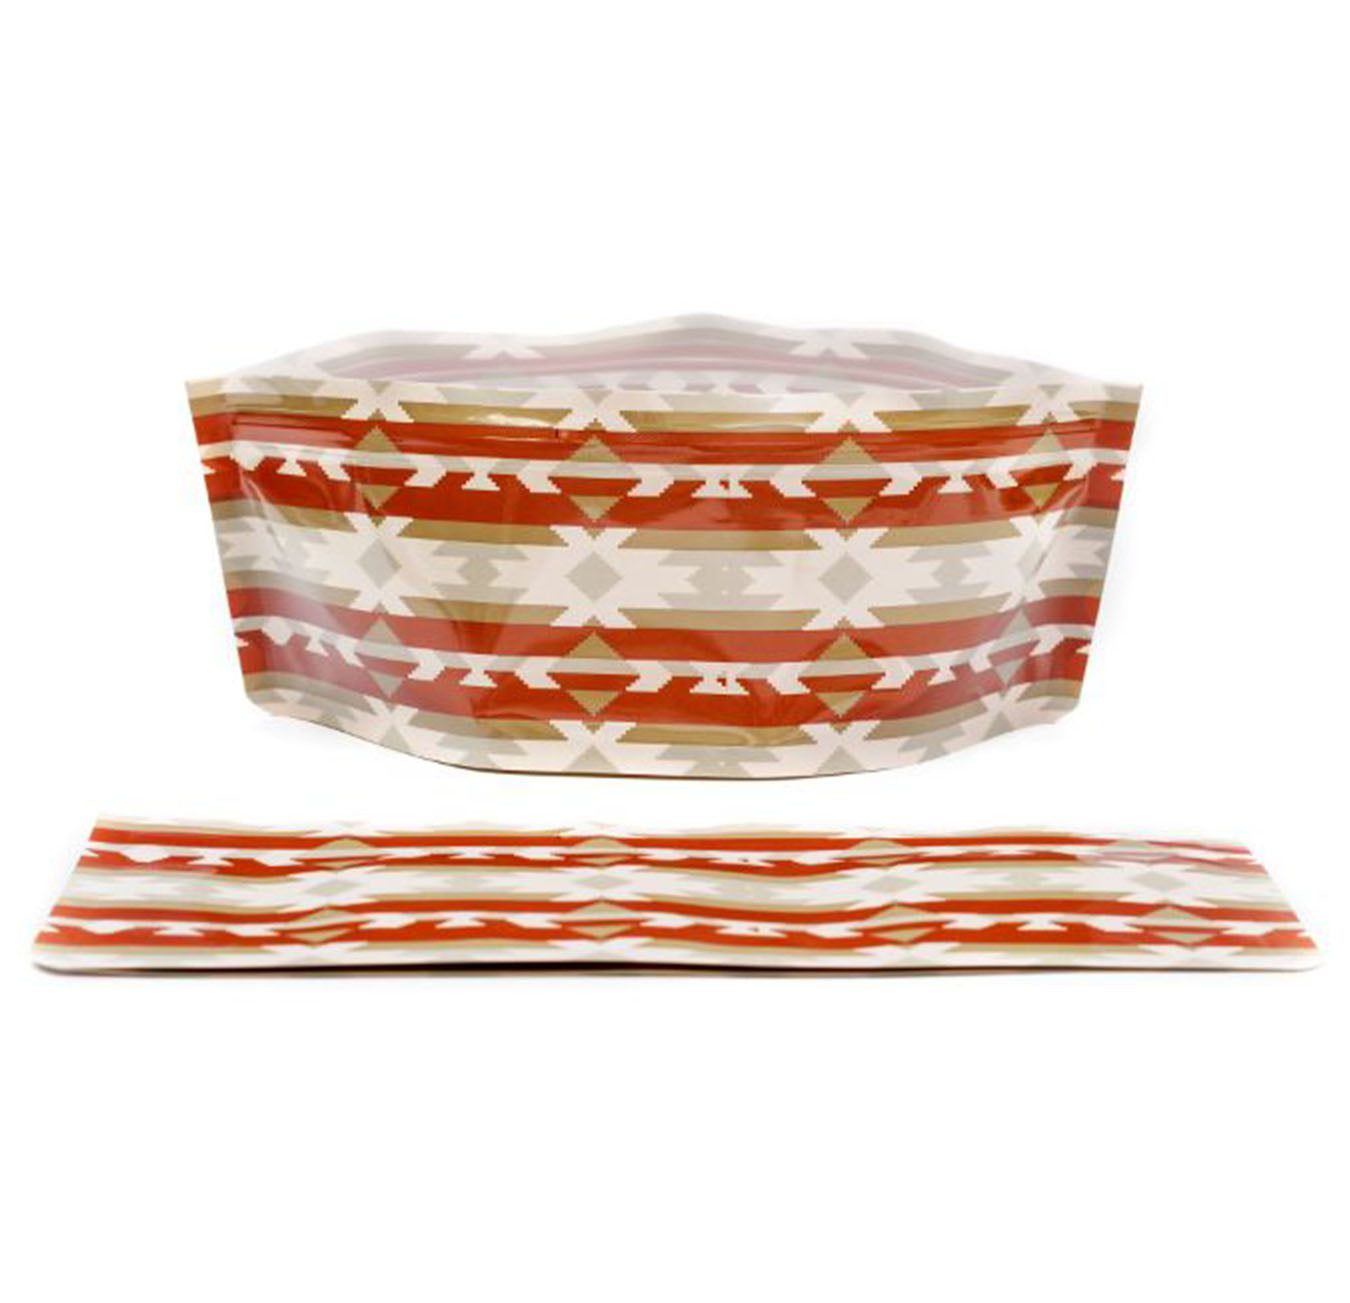 Sierra - Set of 2 bowls